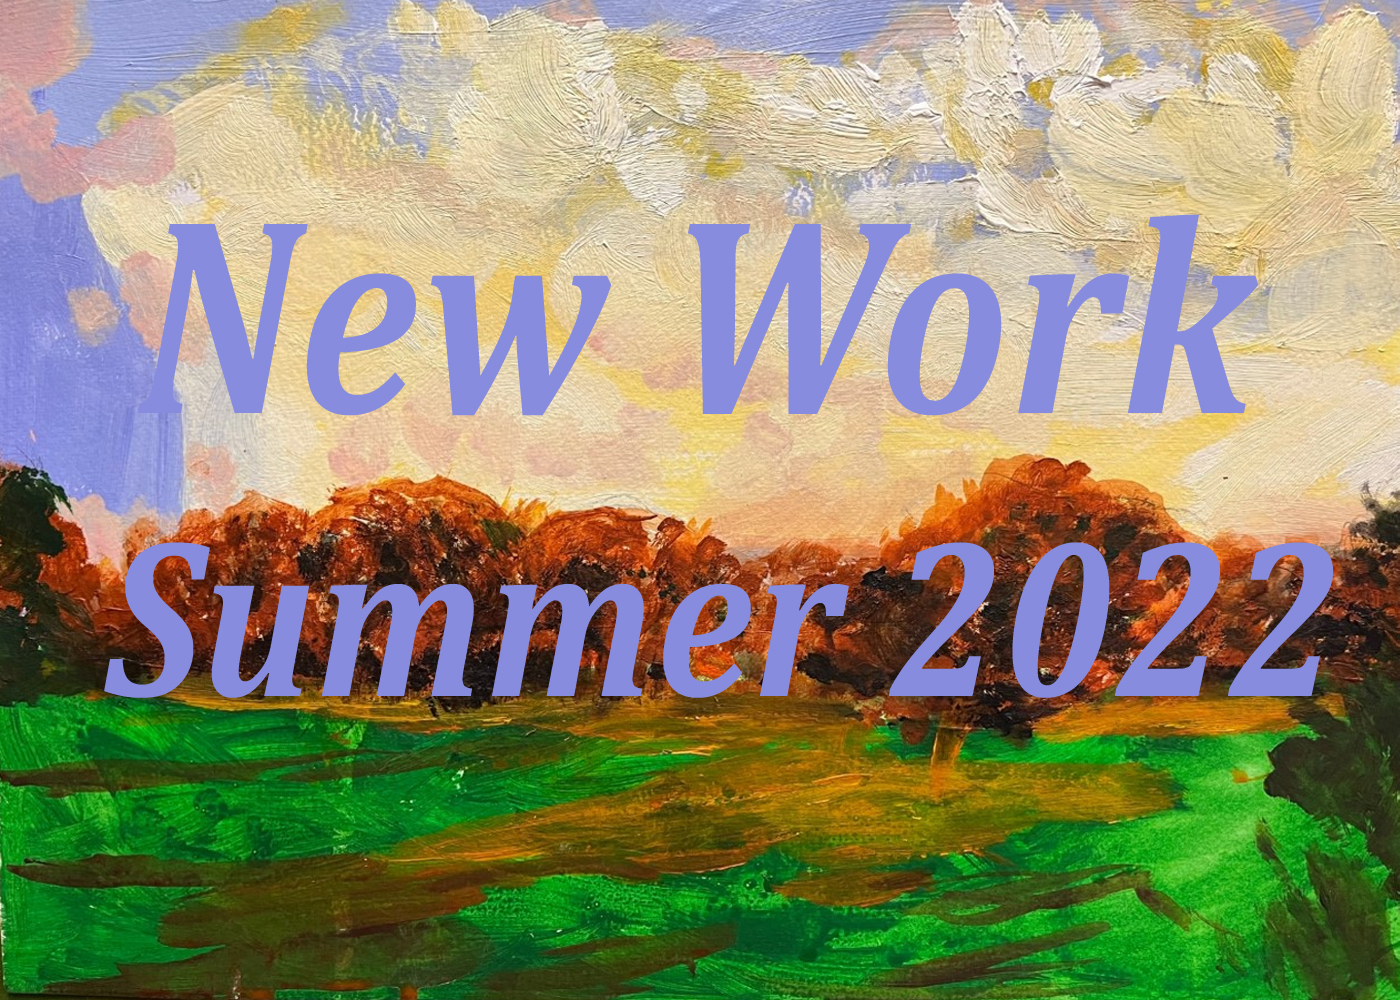 New Work Summer 2022